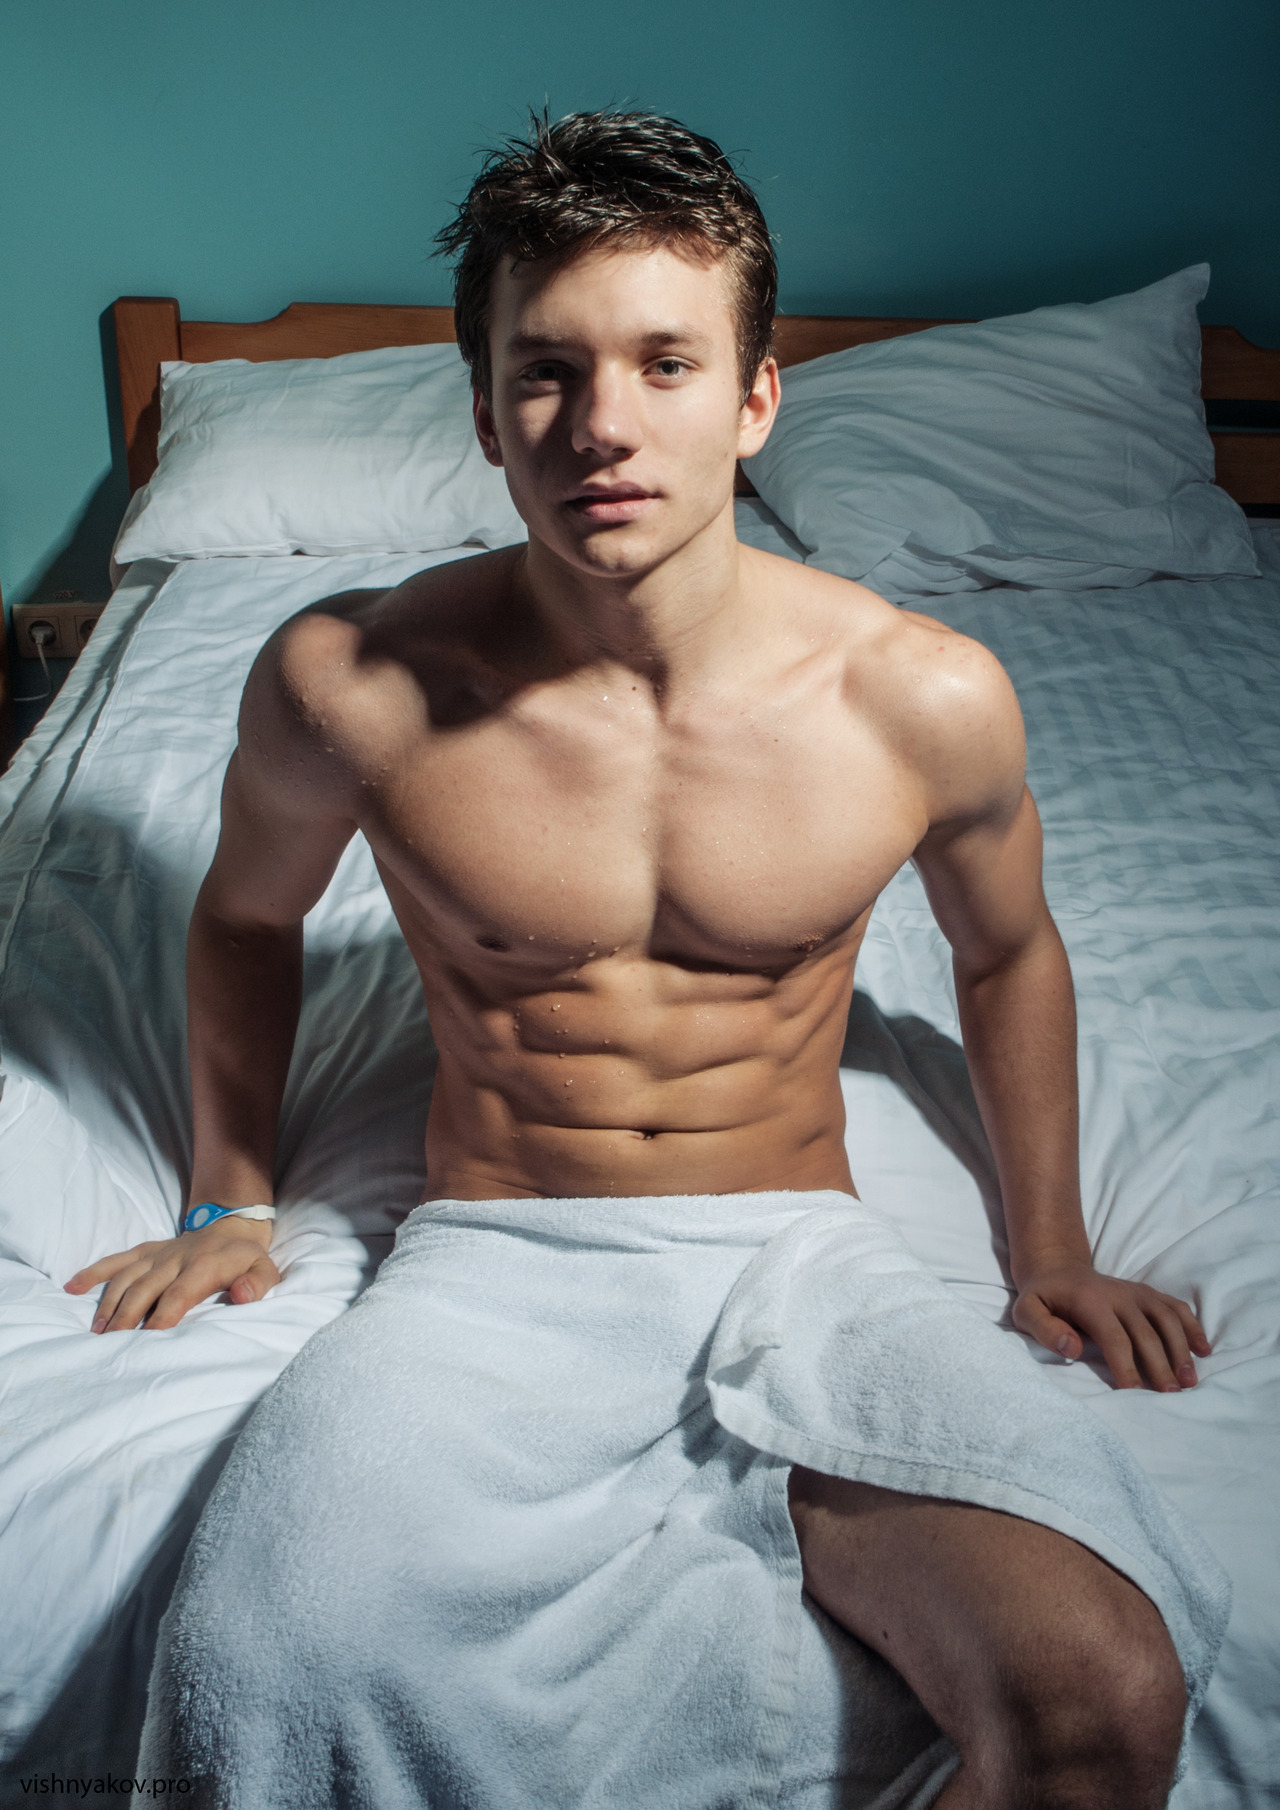 Hot Shirtless Guys : Photo | Attractive Men | Pinterest 